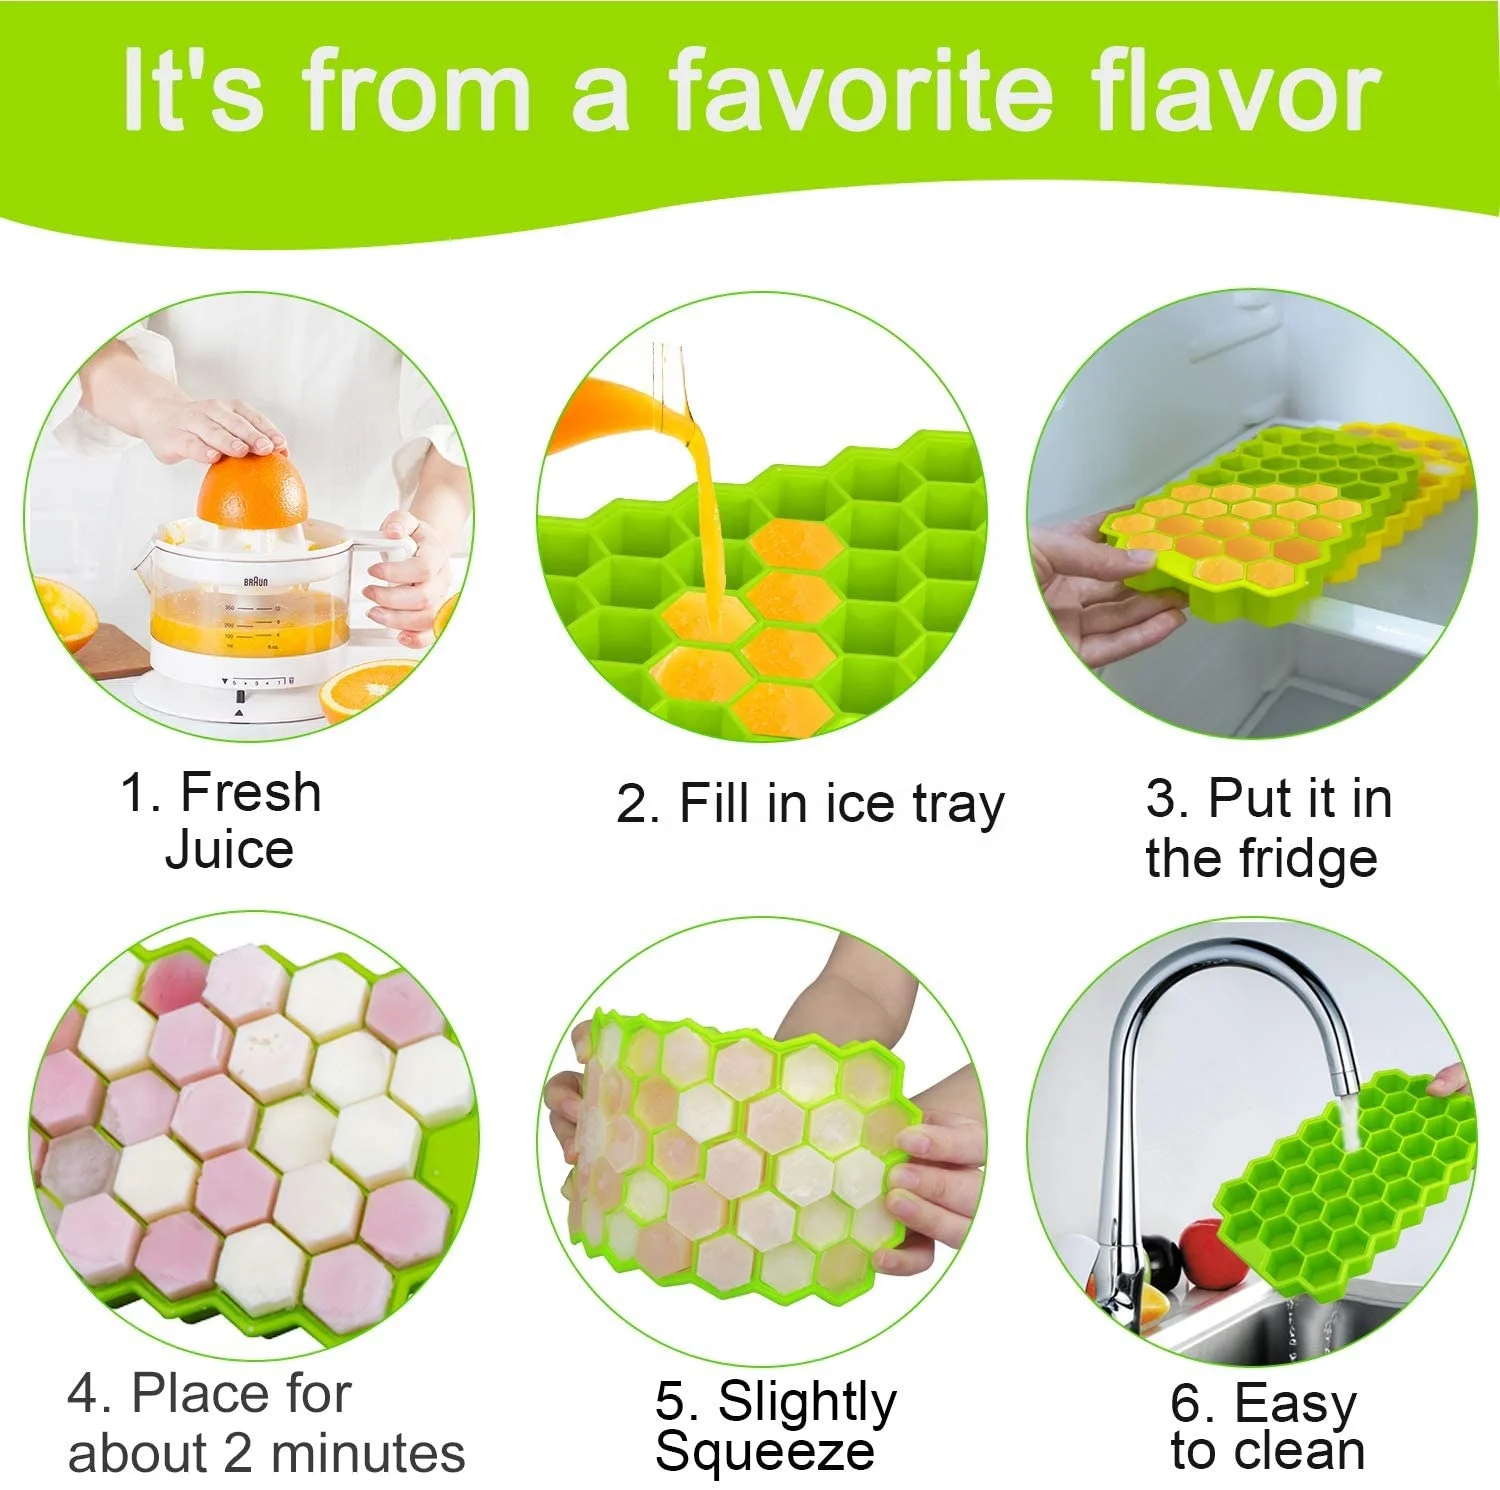 SILIKOLOVE 37 Cavity Ice Cube Tray Honeycomb Ice Cube Mold Food Grade Flexible Silicone Ice Molds